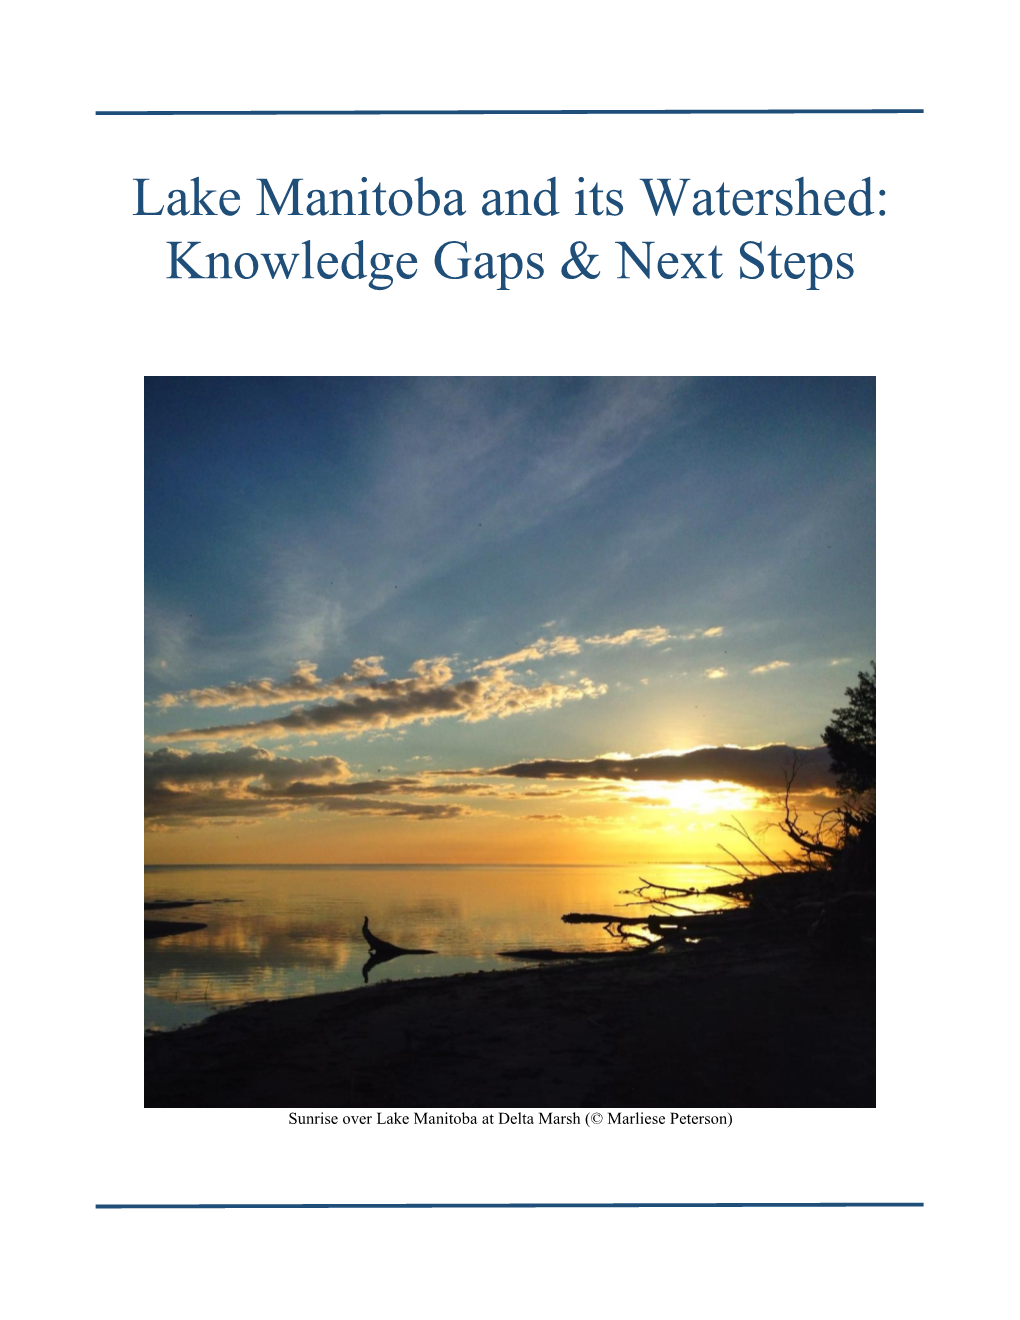 Lake Manitoba Water Qality & Ecosystem Health Workshop